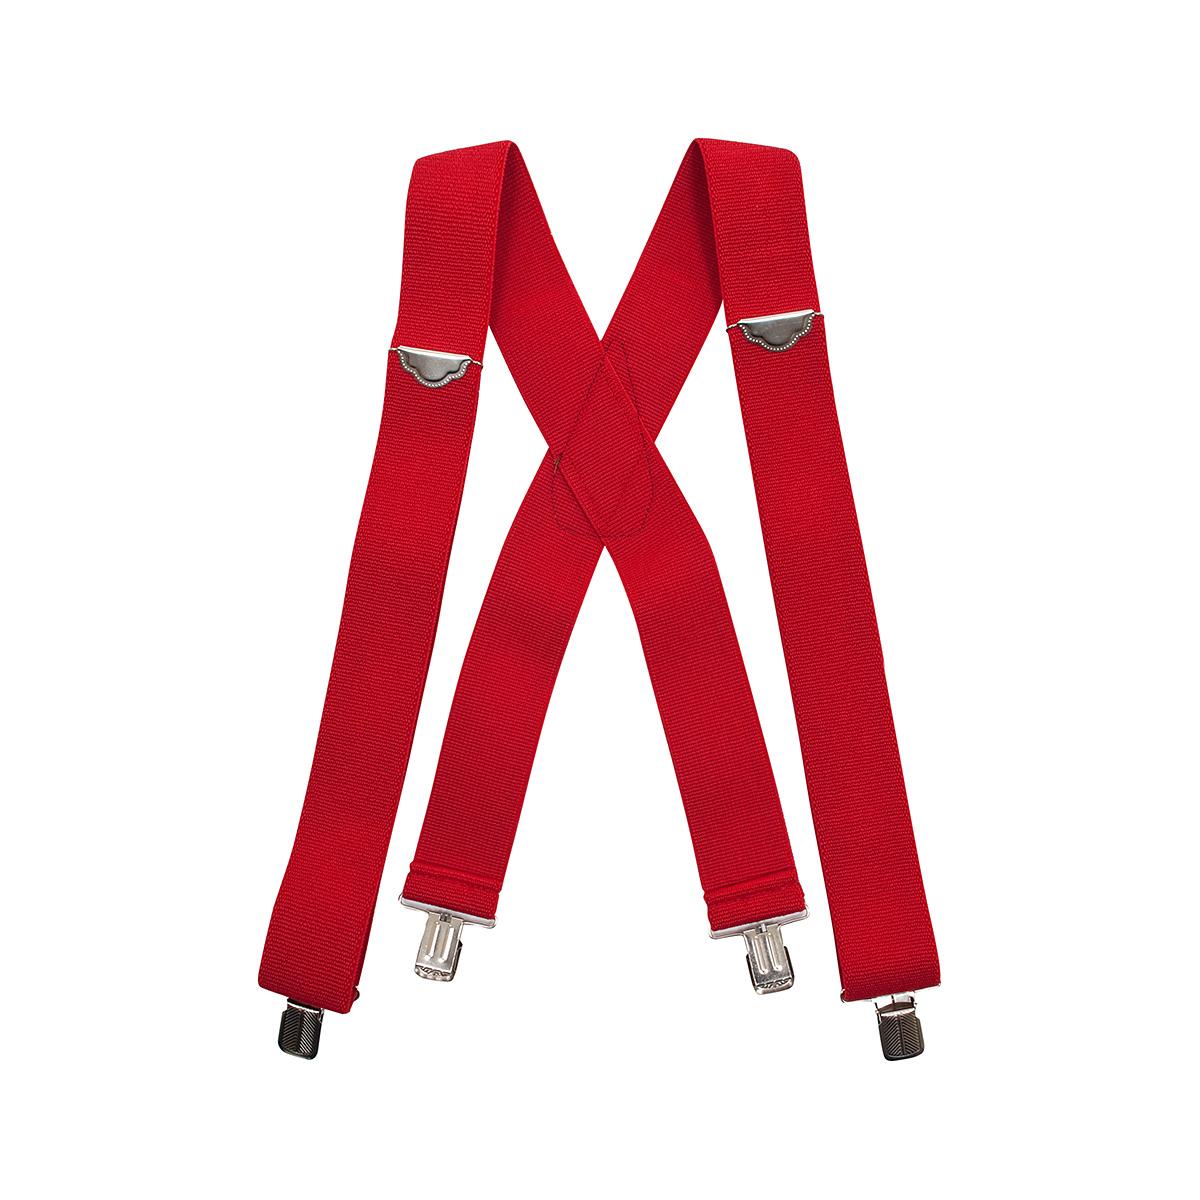  Suspenders - 52 Inch